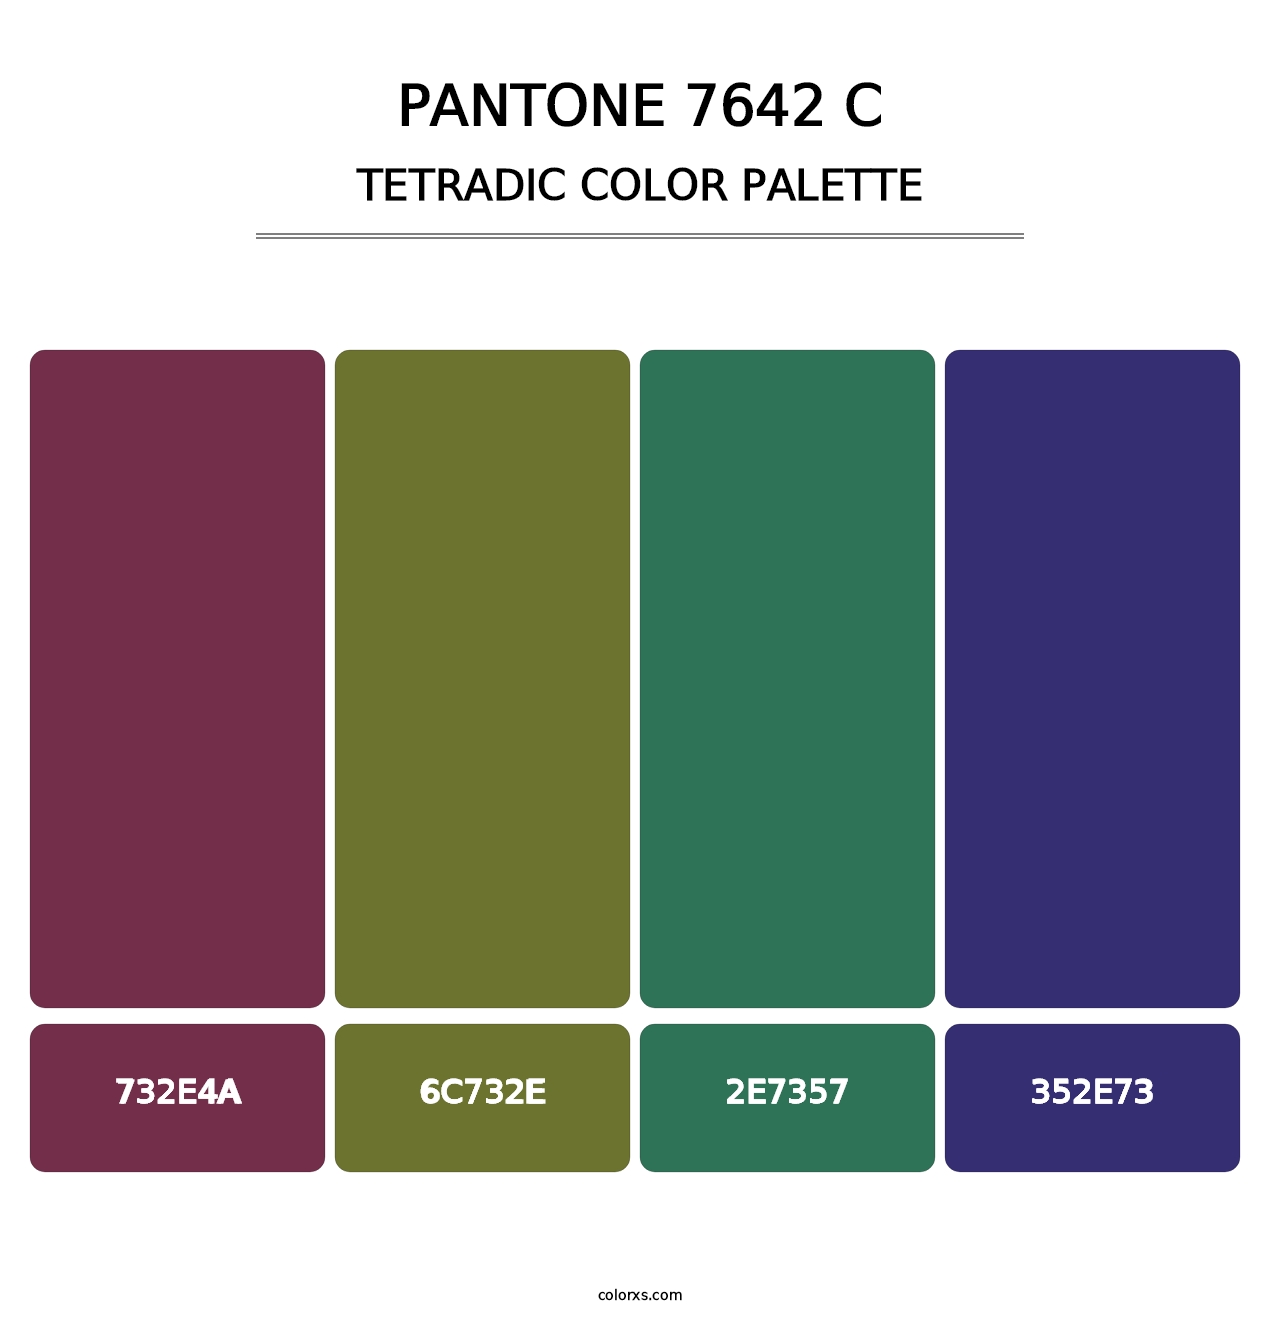 PANTONE 7642 C - Tetradic Color Palette